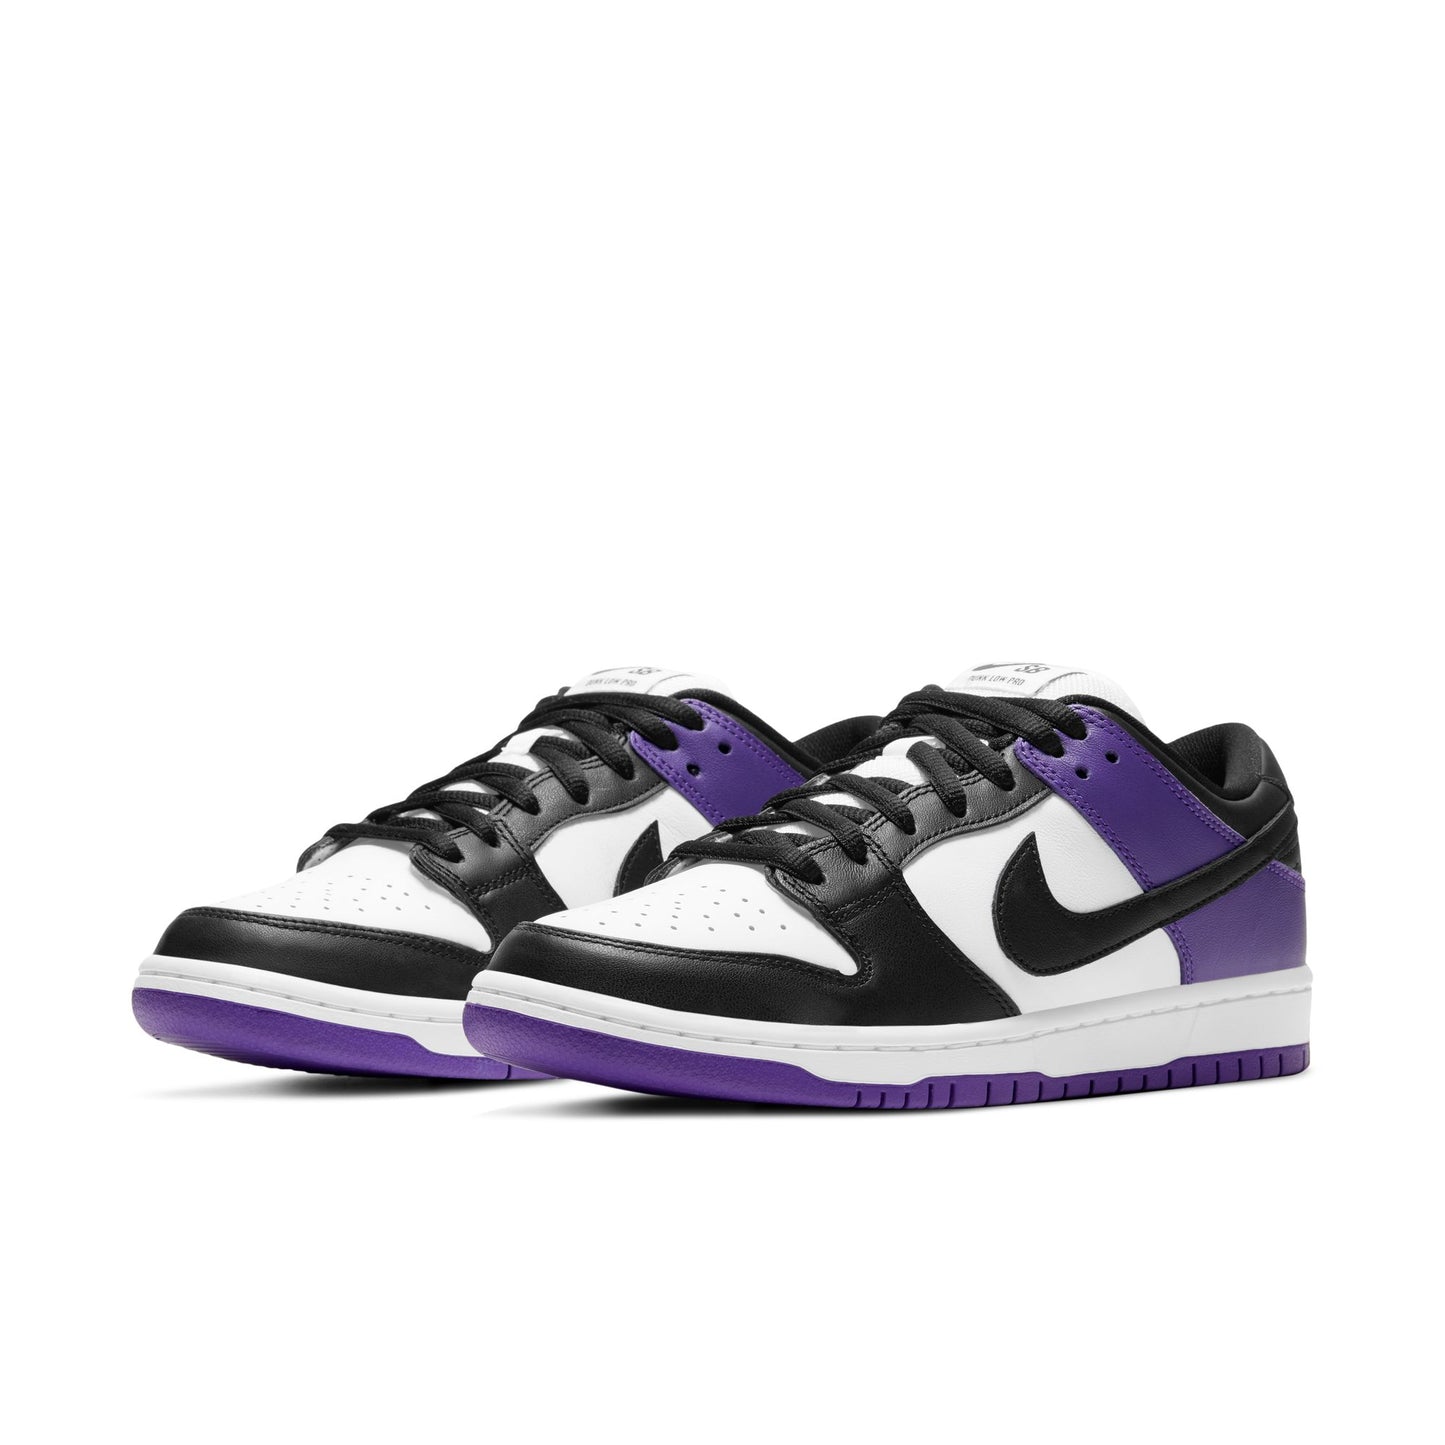 Nike SB Dunk Low Pro Court Purple black white court purple